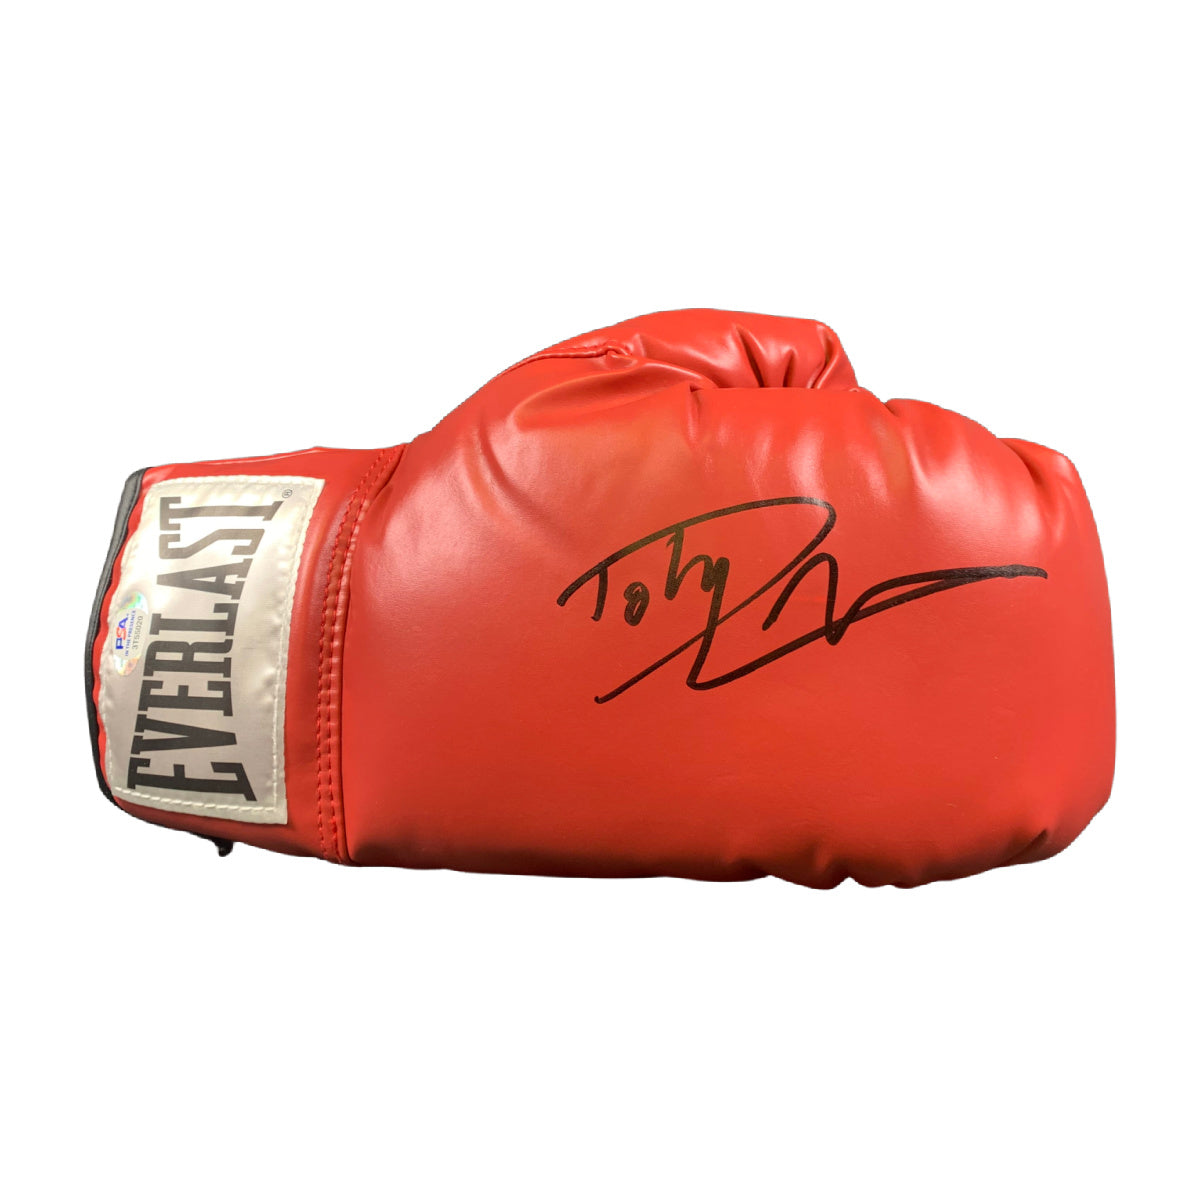 Dolph Lundgren Signed Boxing Glove Rocky Ivan Drago Autographed PSA COA